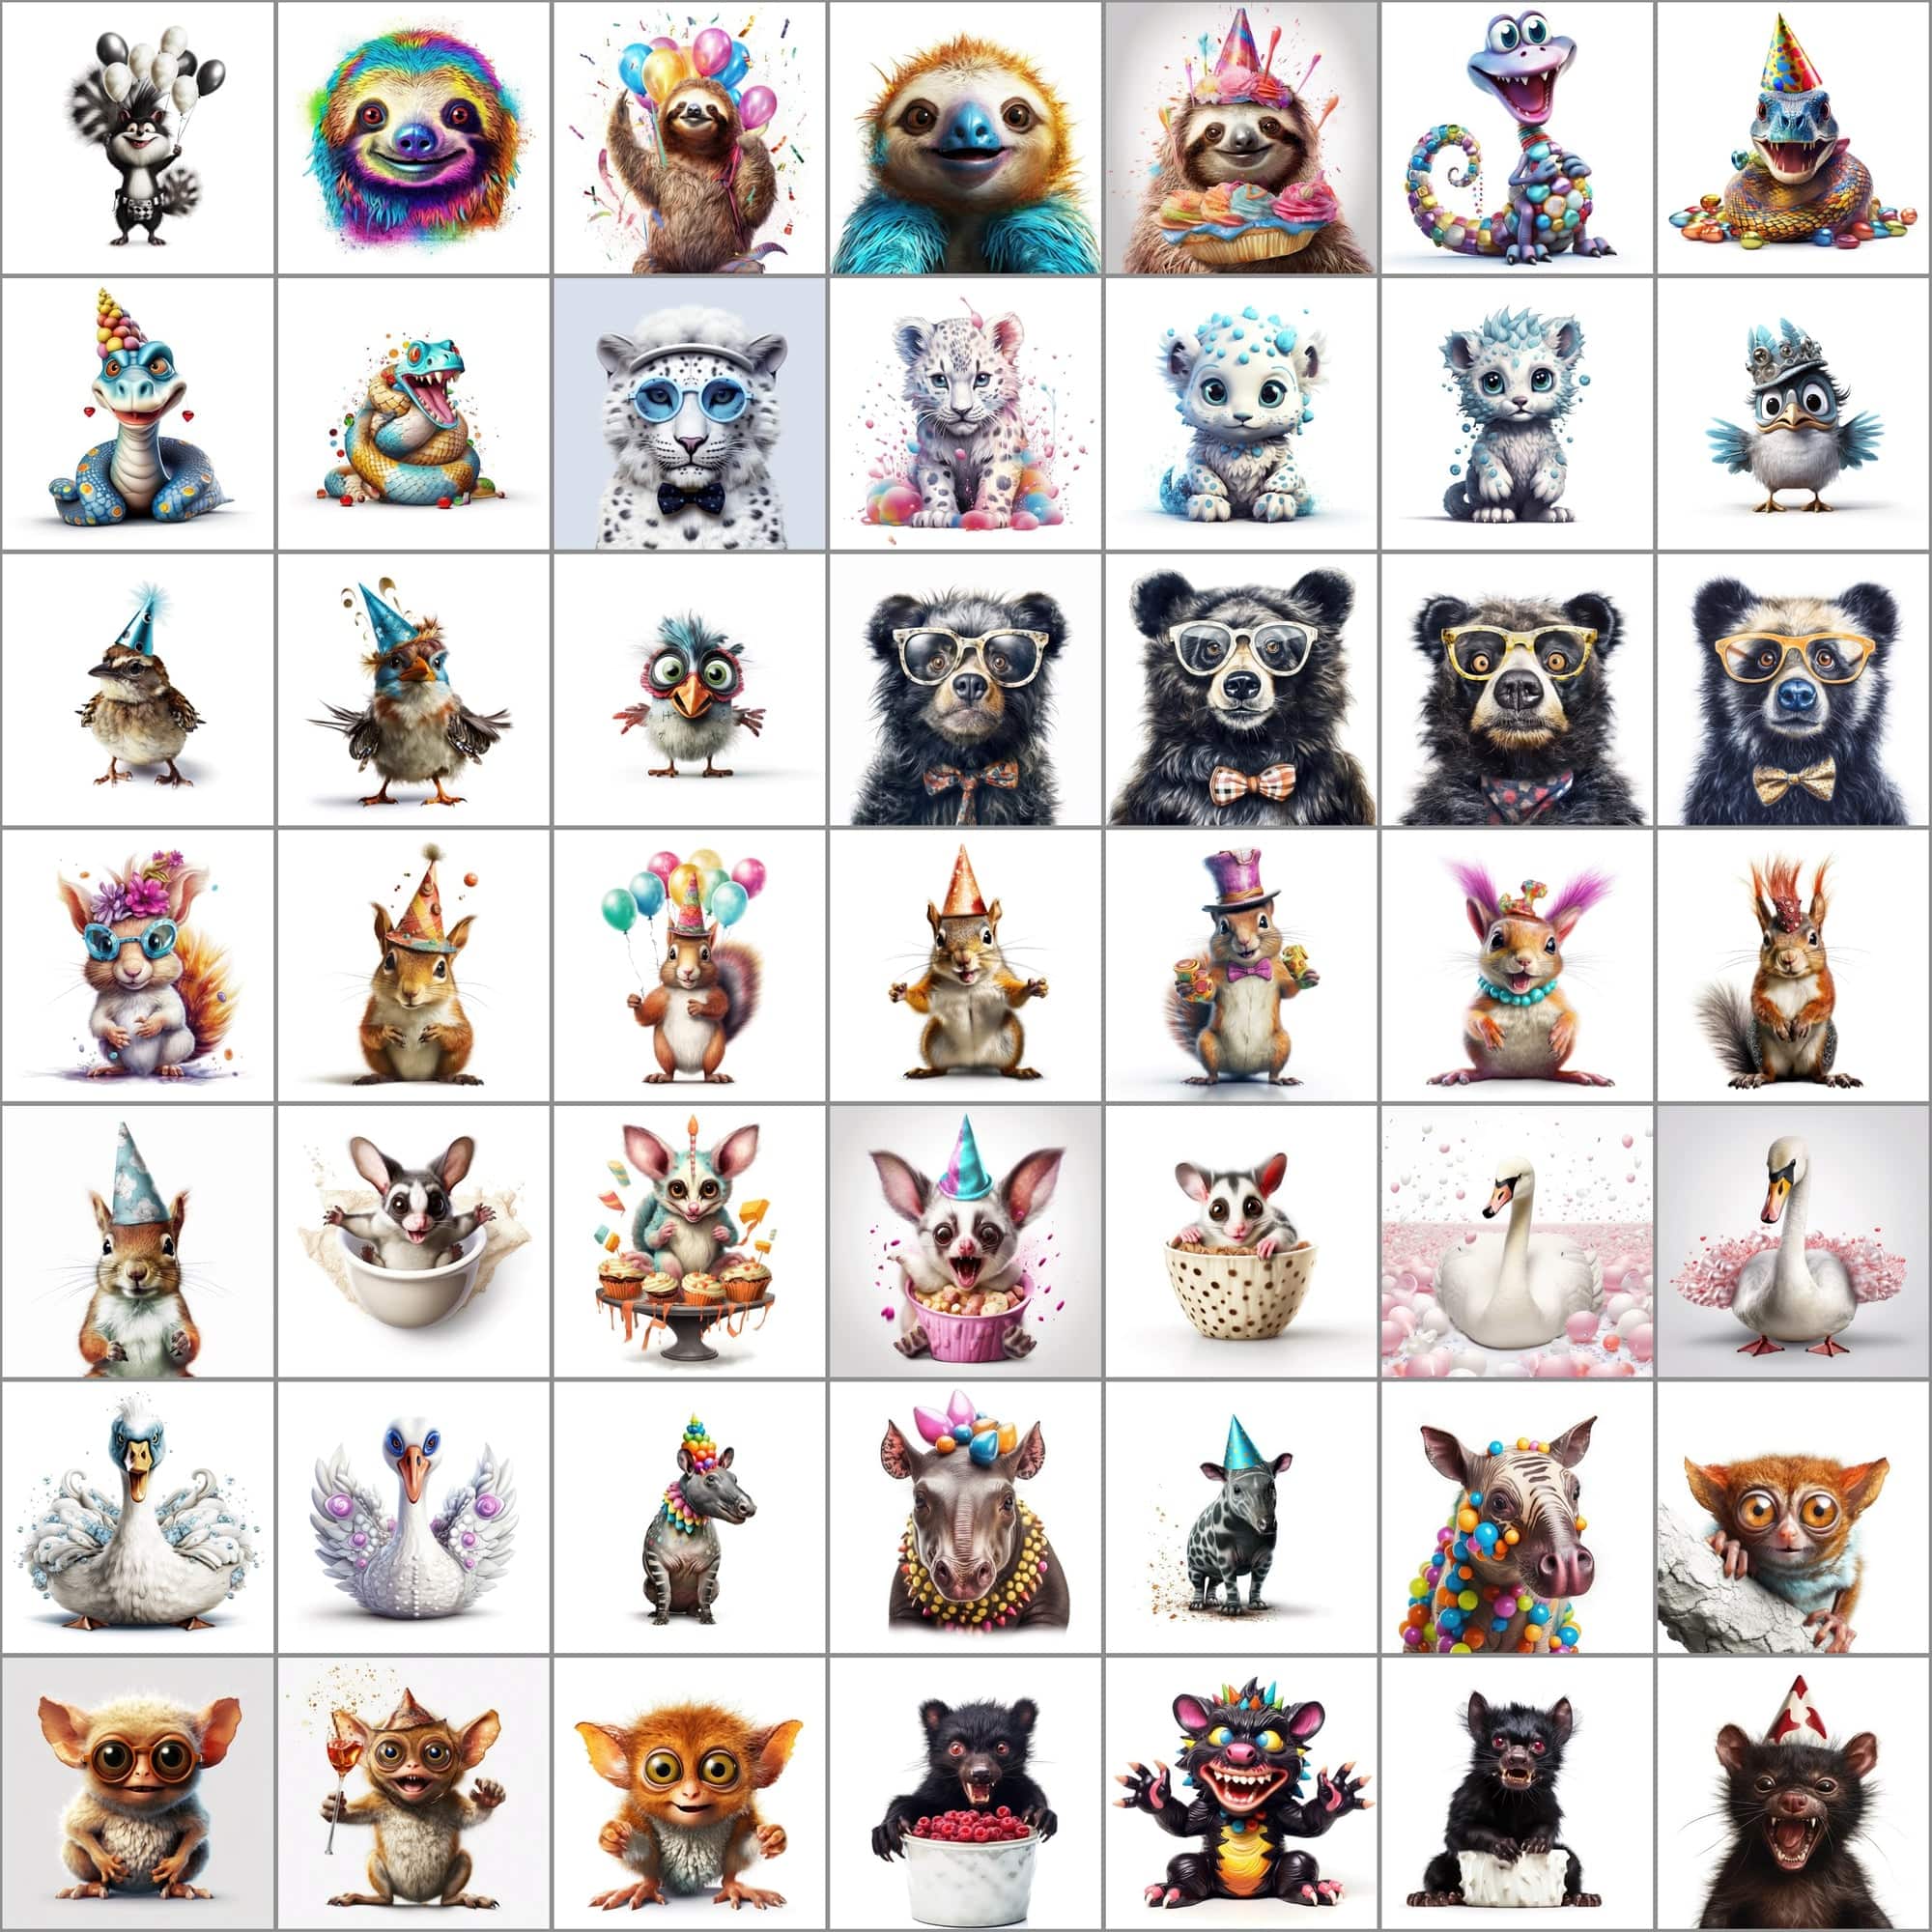 780+ Funny Animal PNG Images - Hyperrealistic & Colorful, Commercial License Digital Download Sumobundle